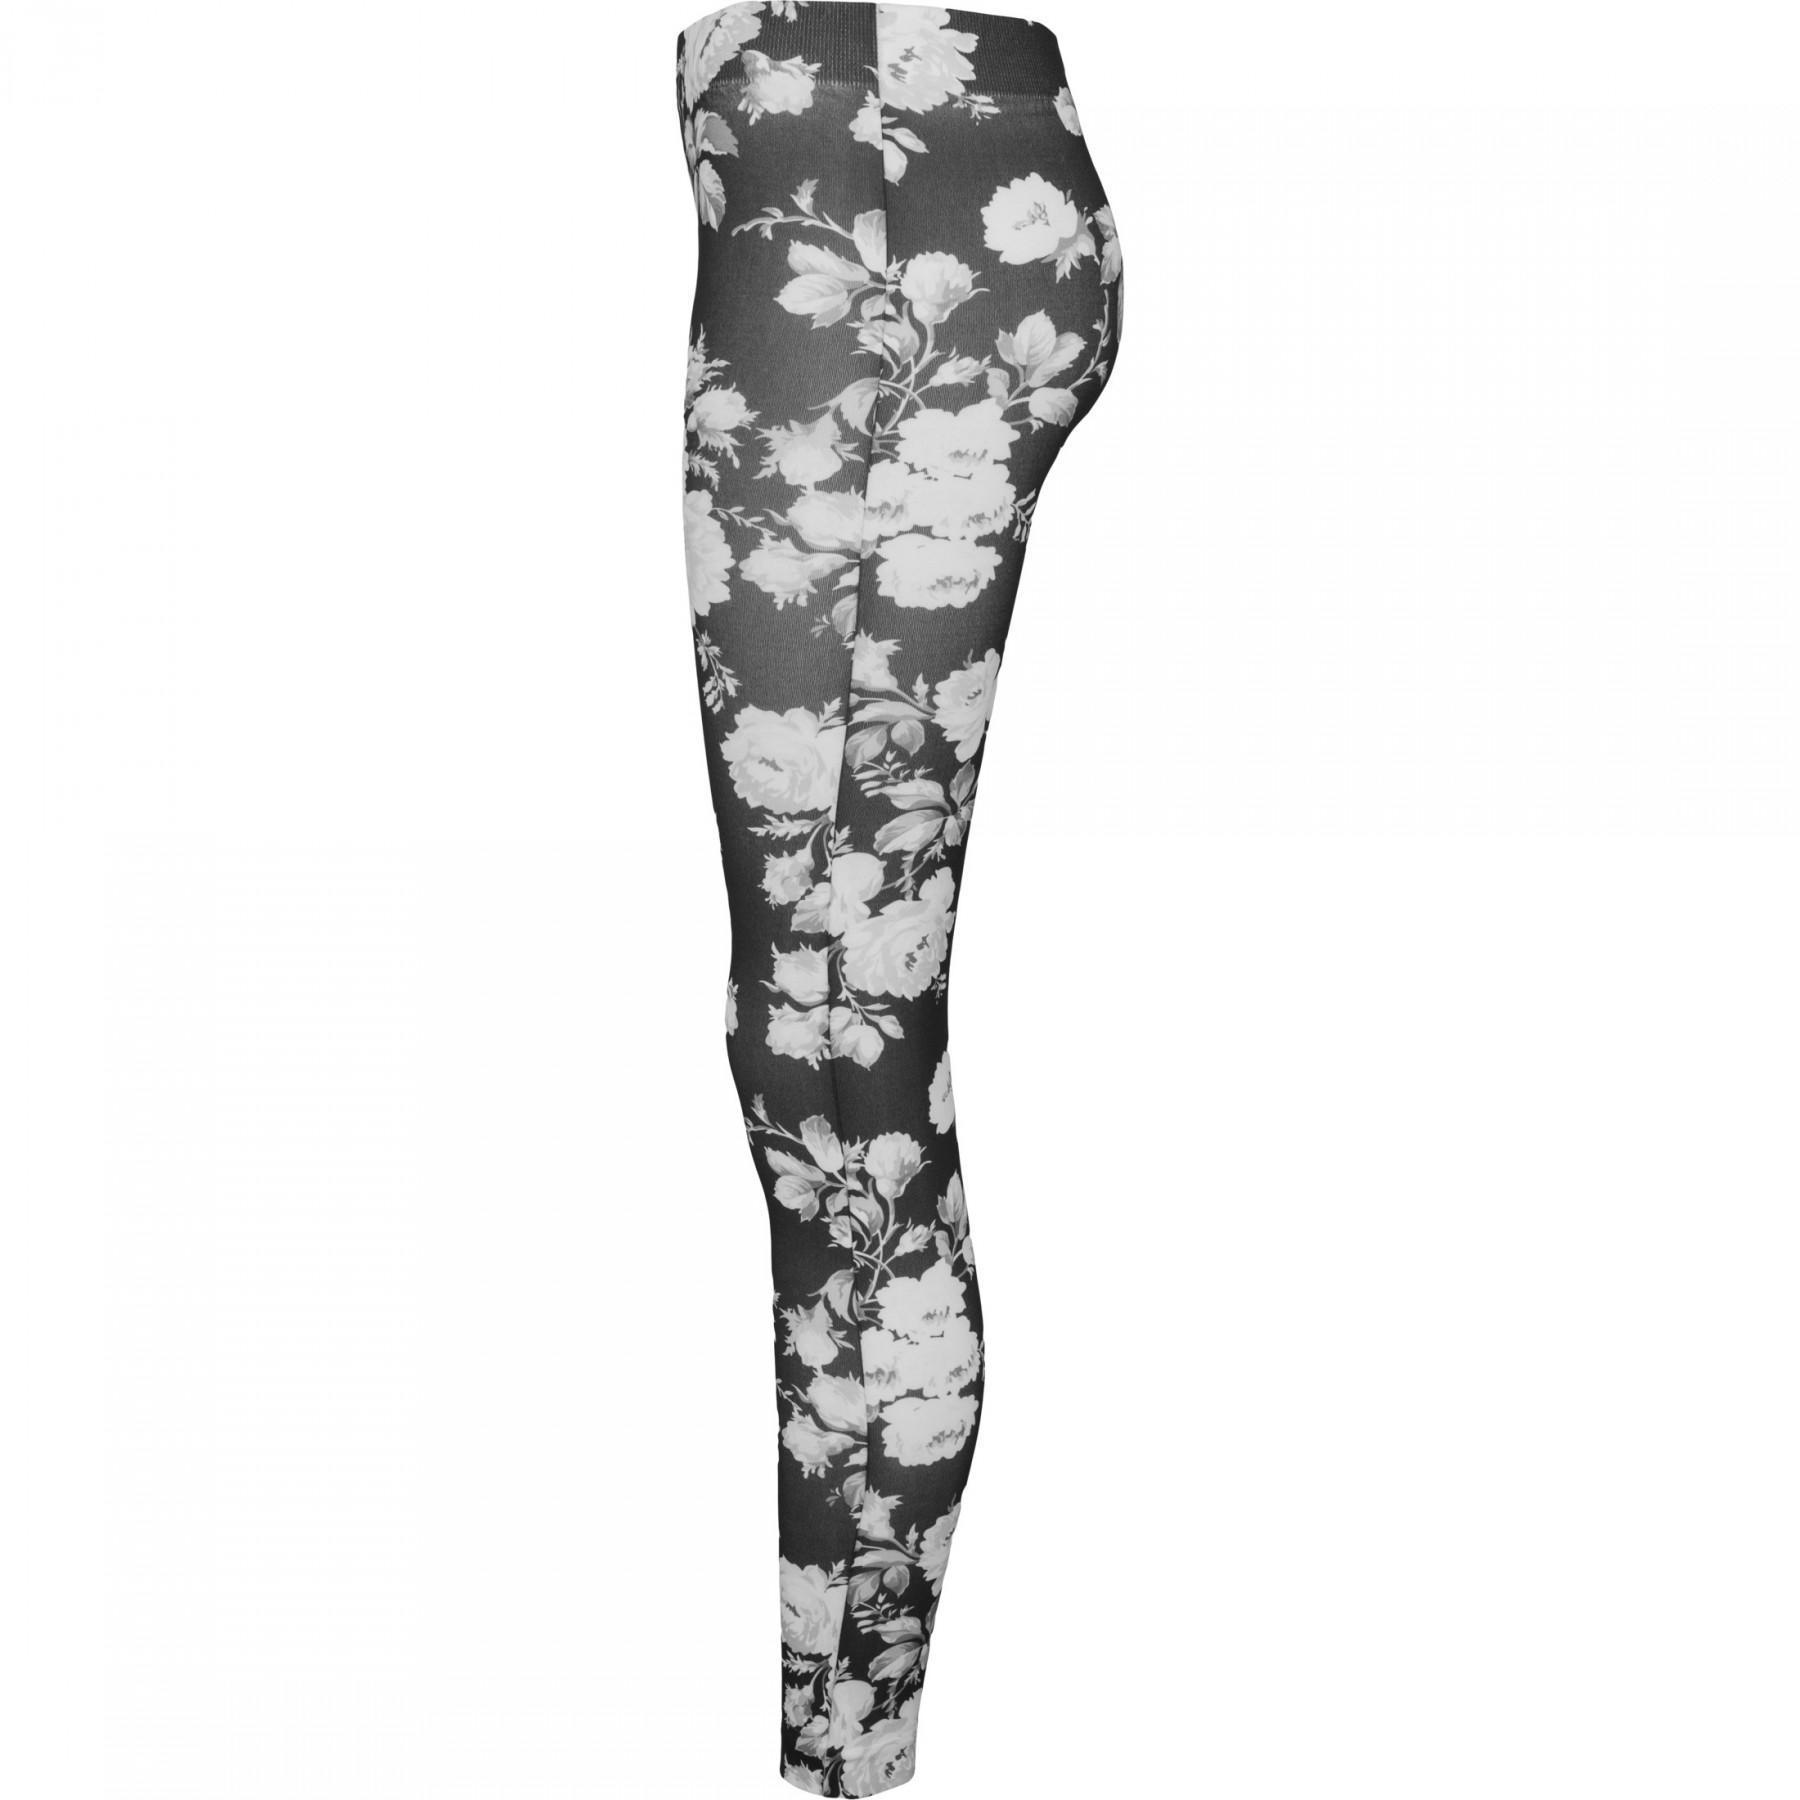 Legging woman clássico urbano flor gt